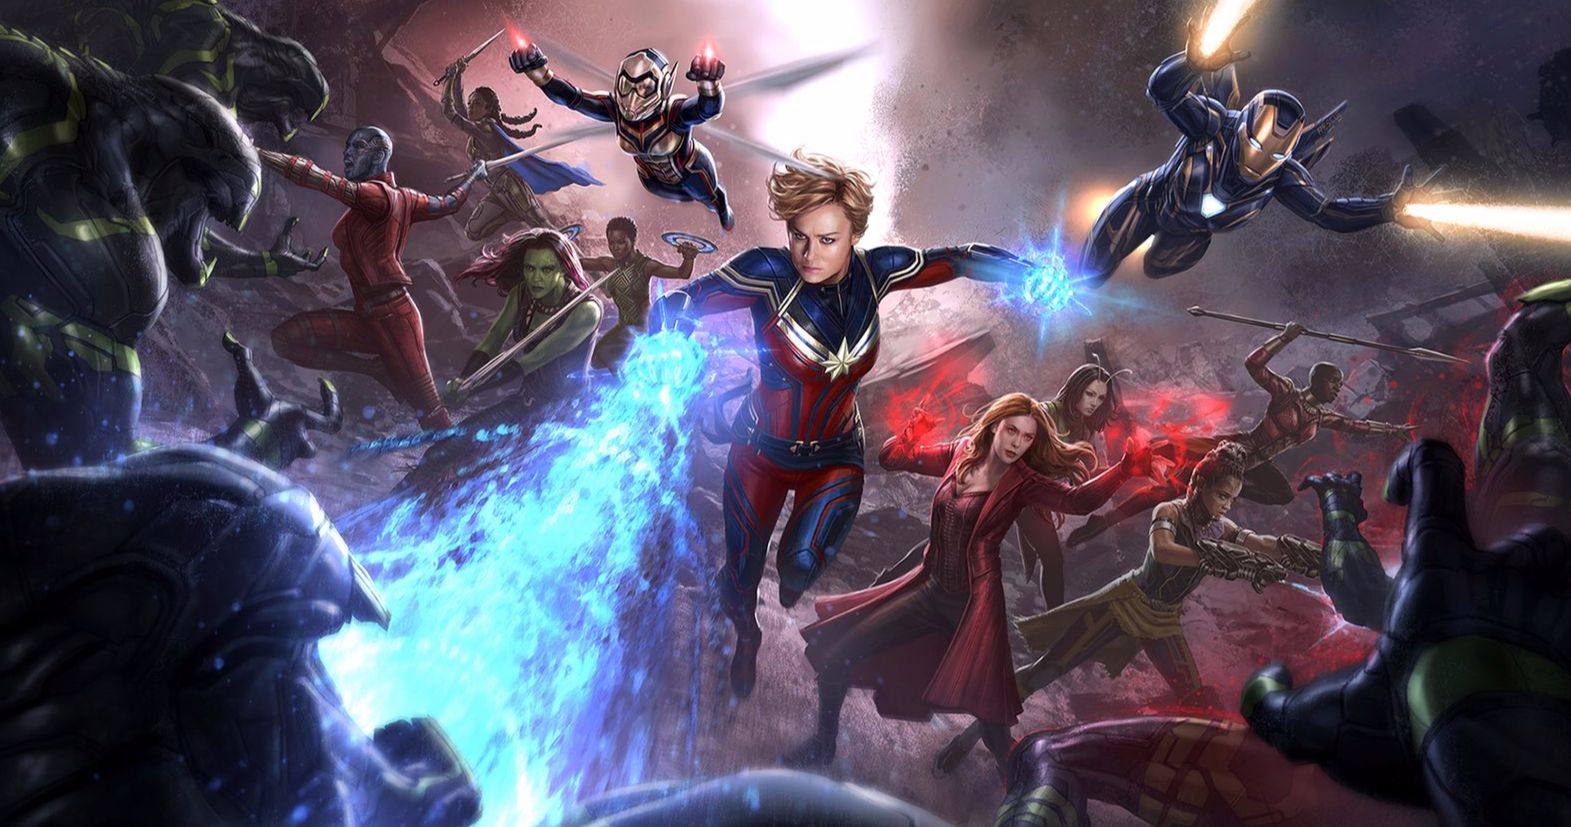 Original Avengers 4 A-Force Scene Was Bigger, Better and a True Team Effort